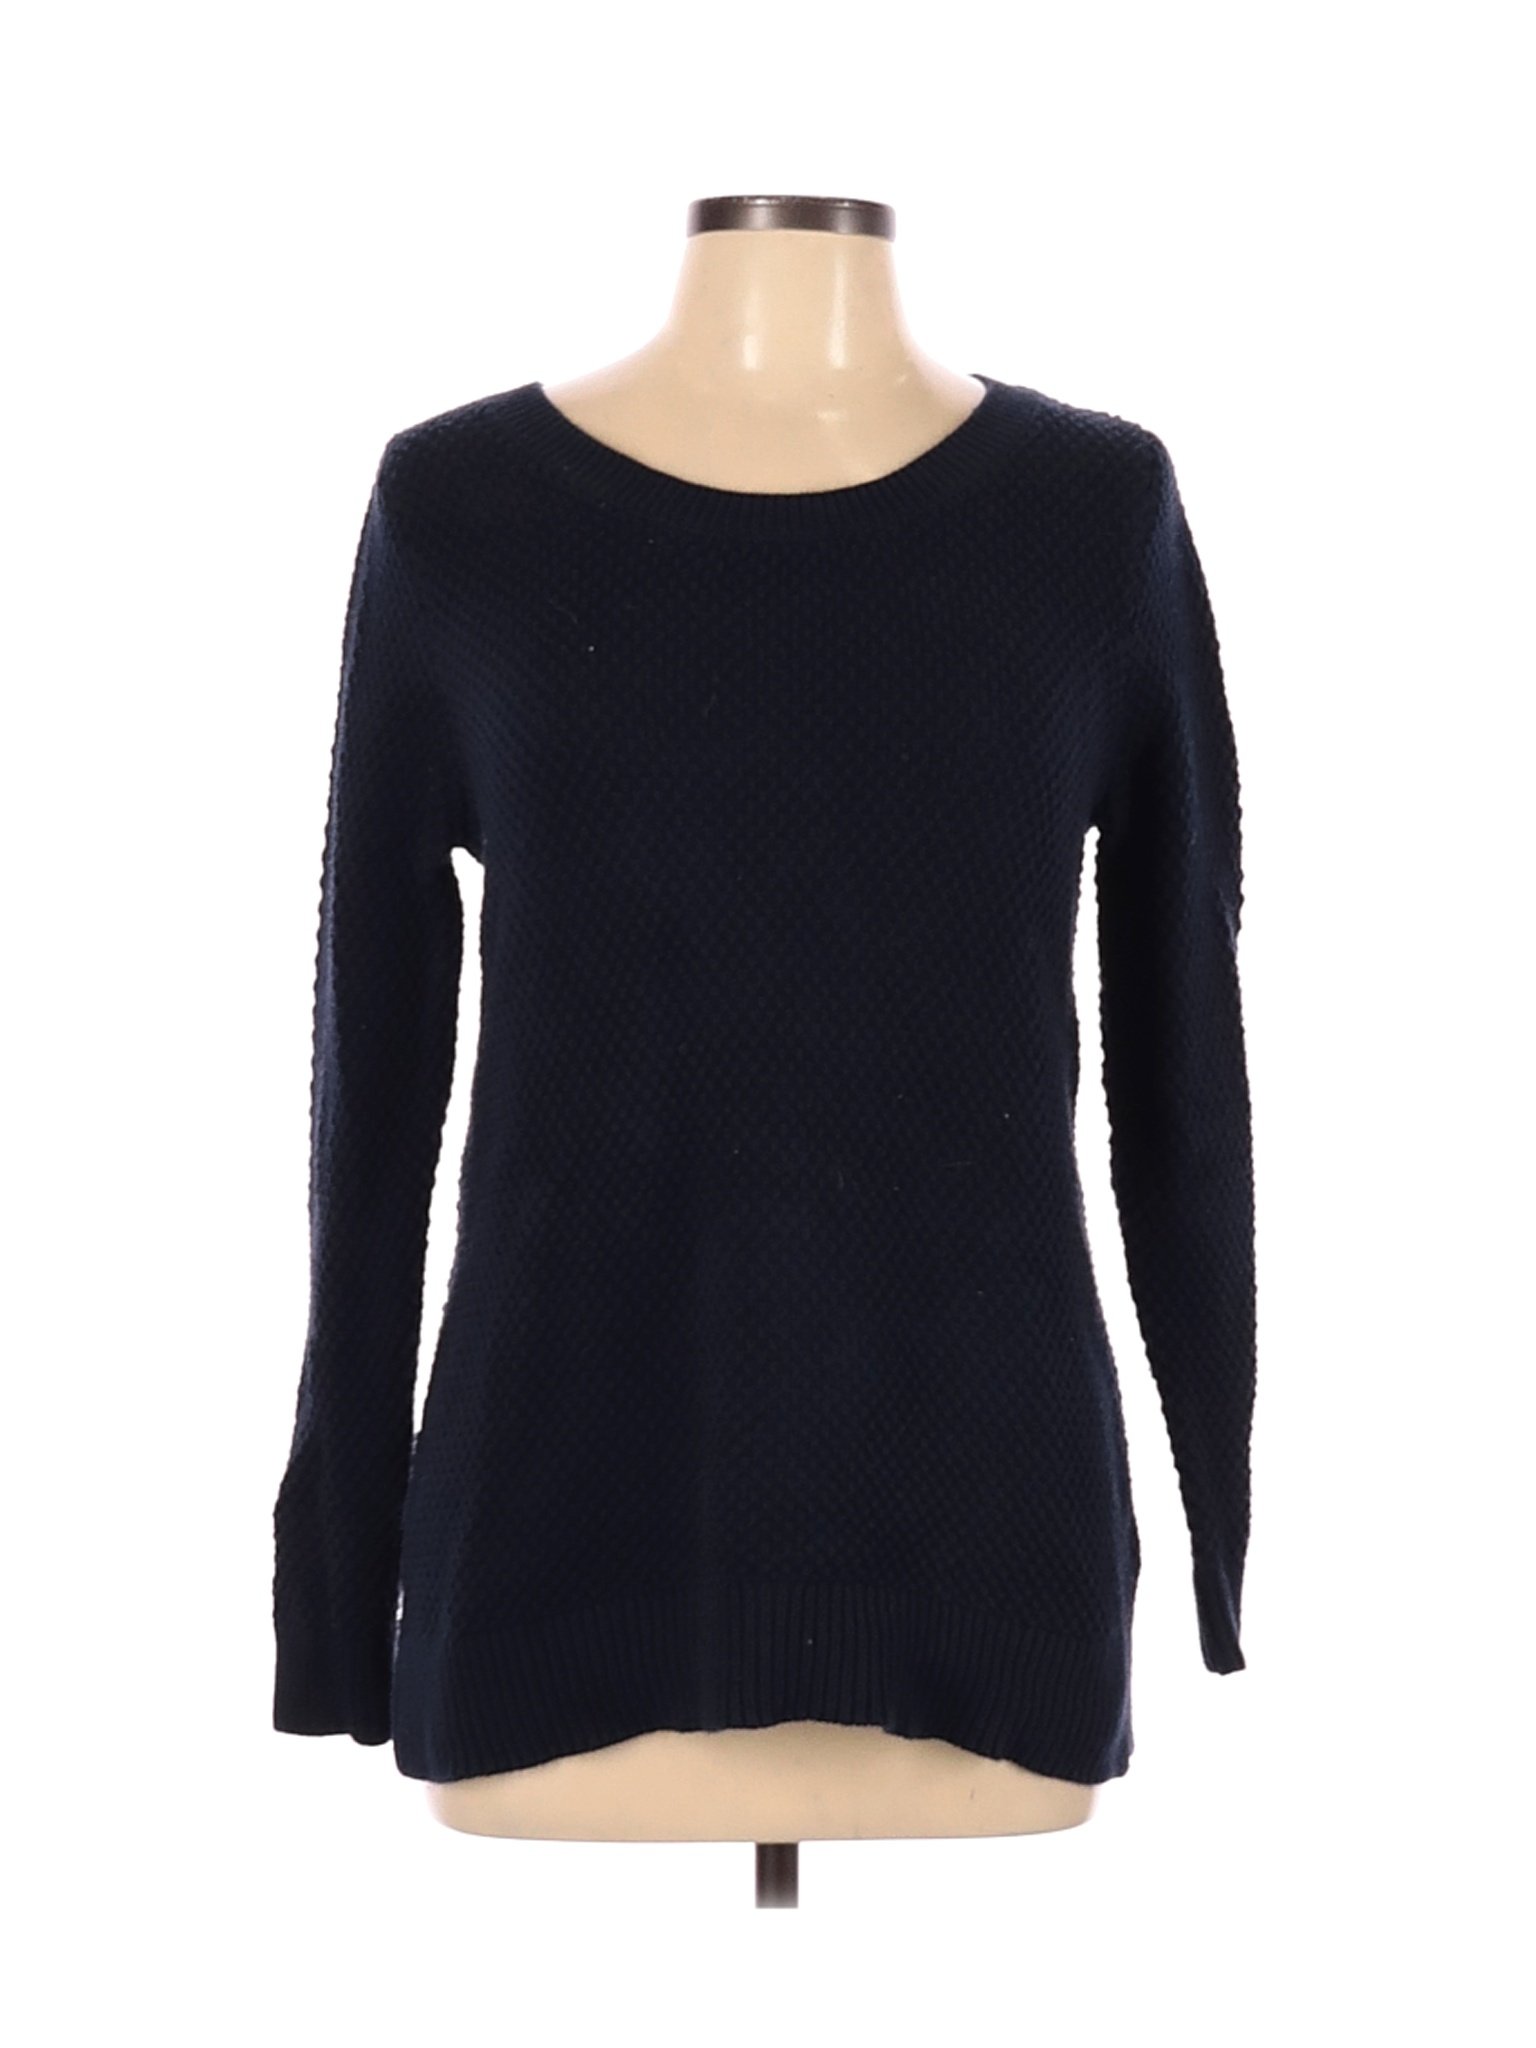 Gap Women Black Pullover Sweater L | eBay